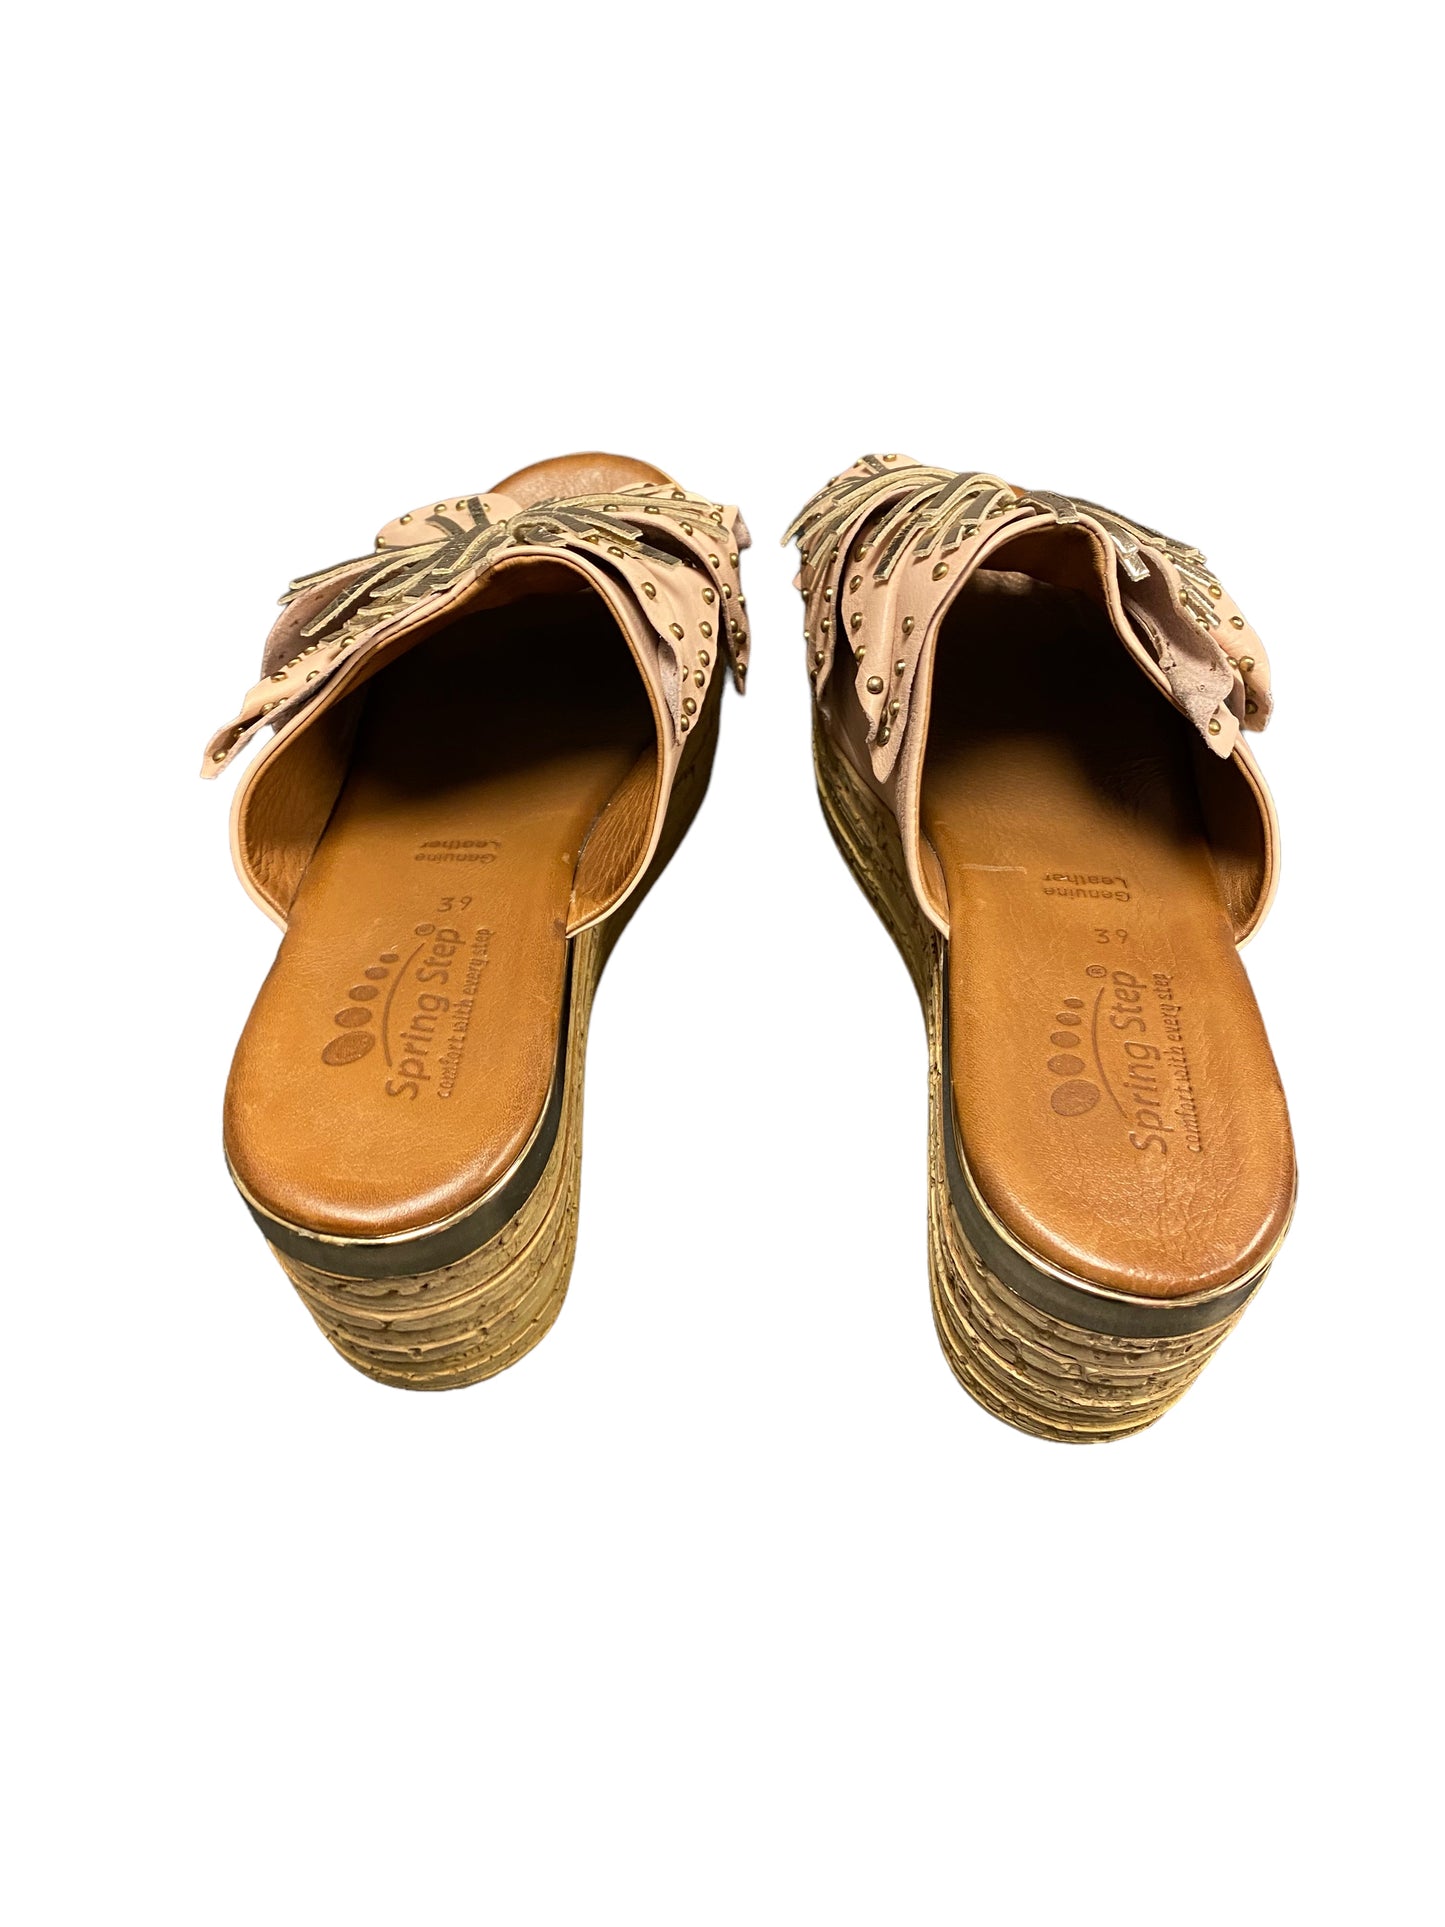 Pink & Silver Sandals Heels Wedge Spring Step, Size 8.5